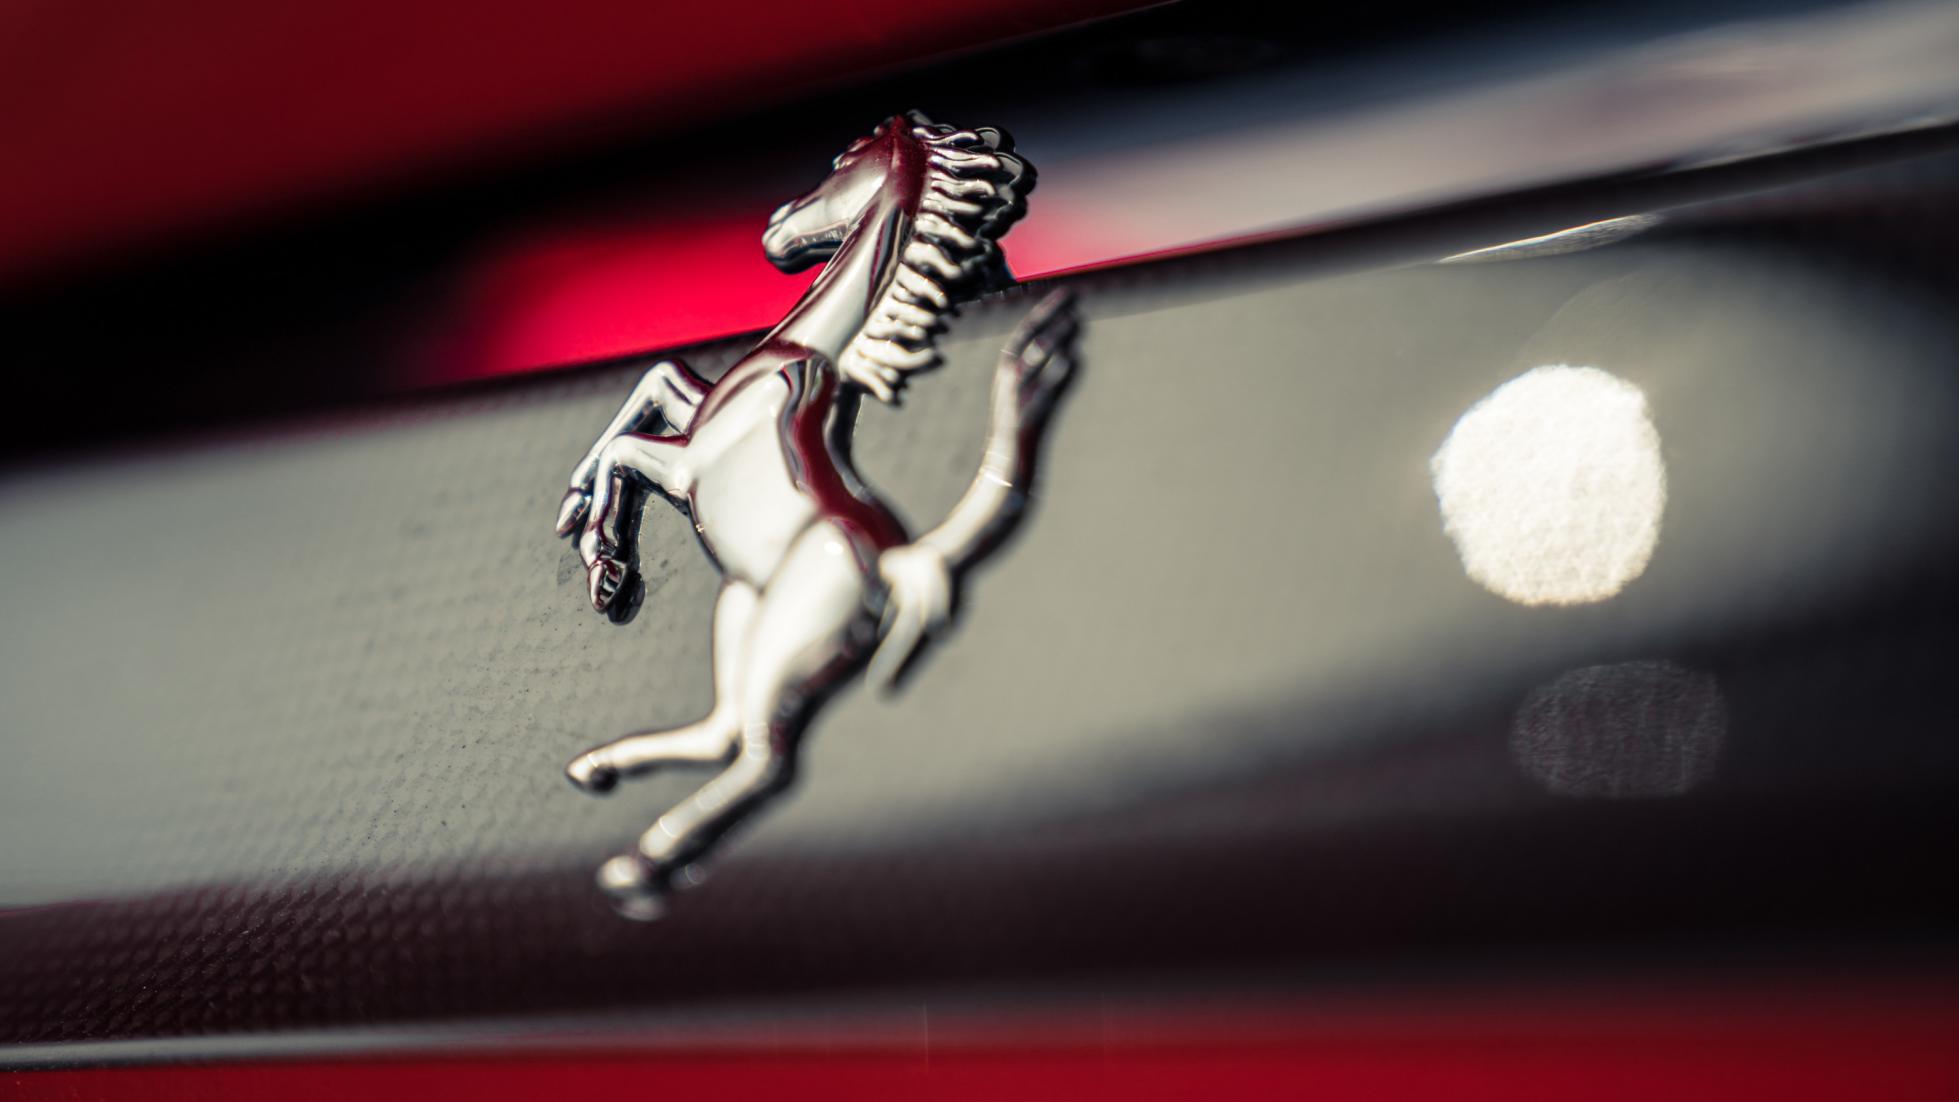 TopGear | Ferrari 488 Pista review: Chris Harris drives 711bhp special